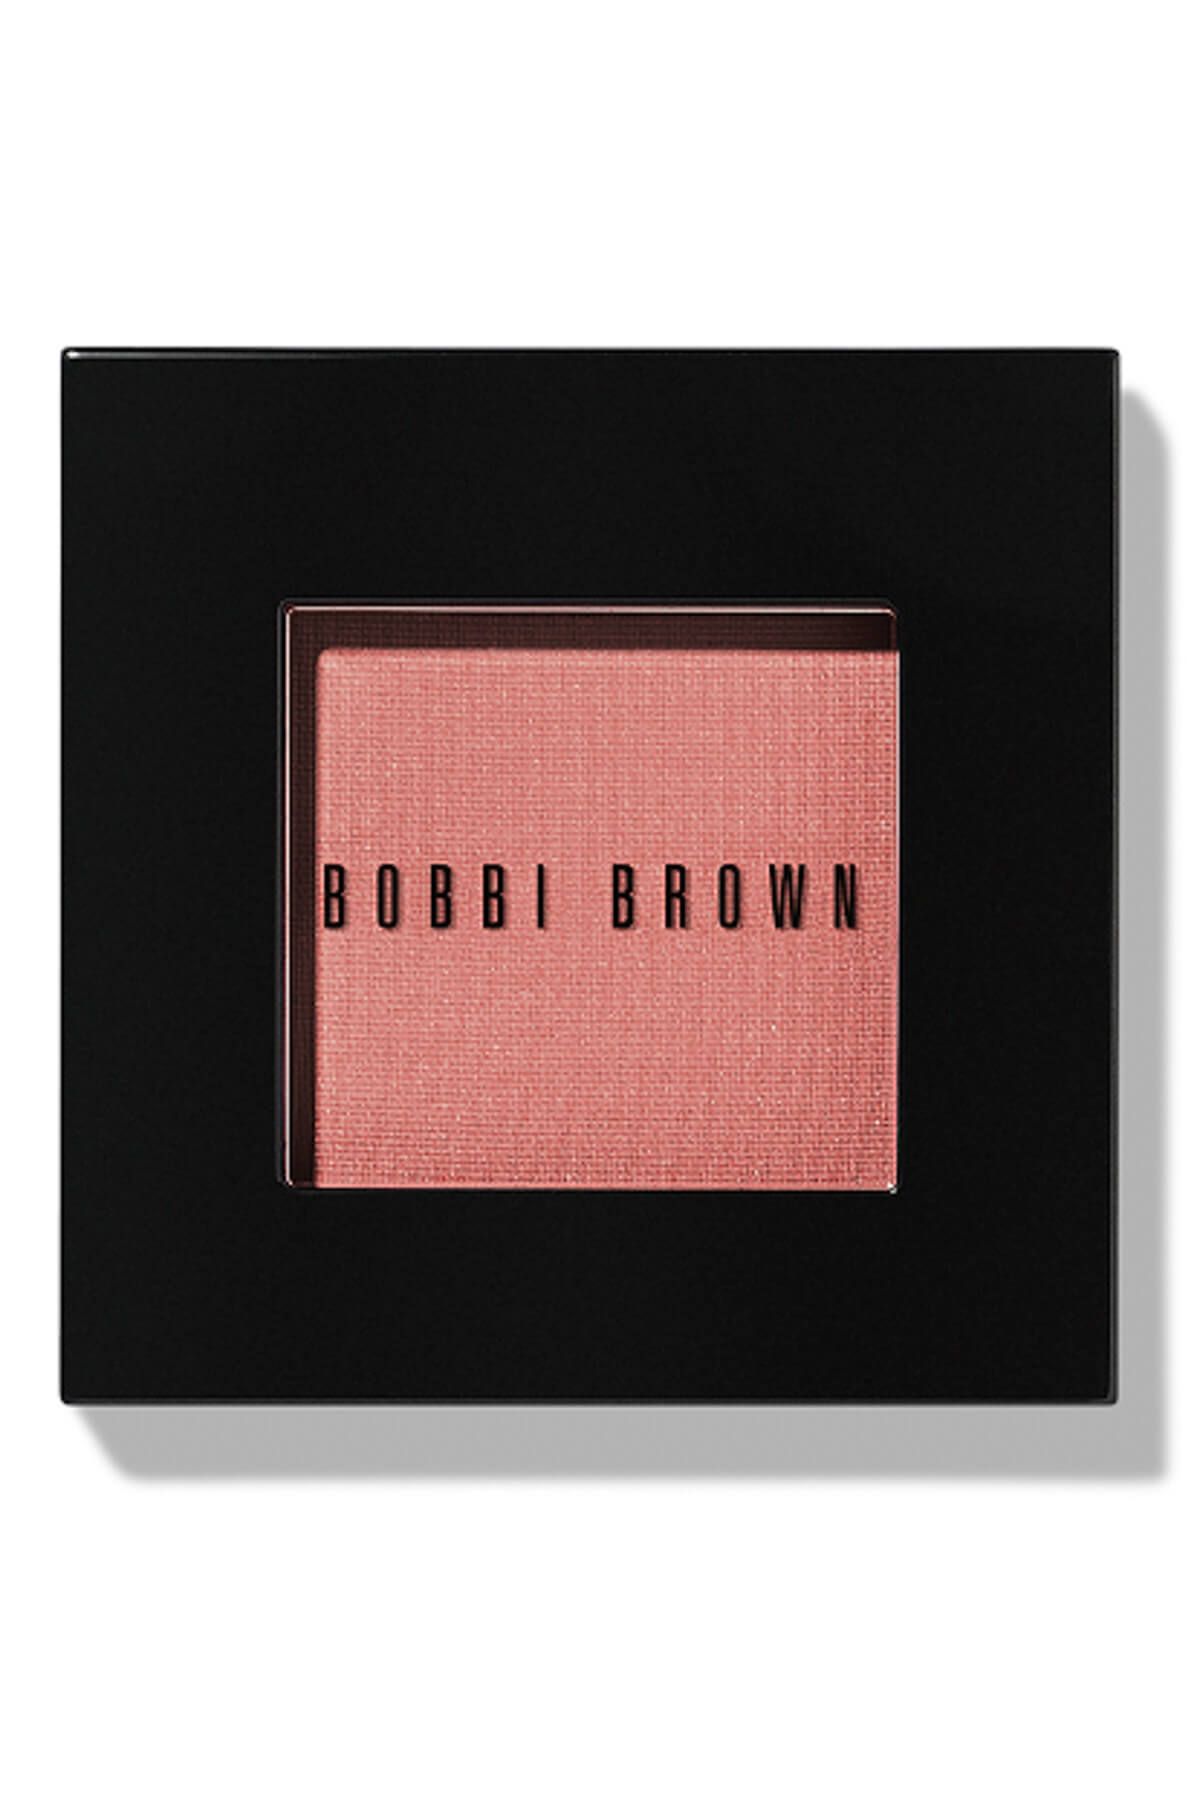 Bobbi Brown Blush / Allık 3.7 G Tawny 716170059594